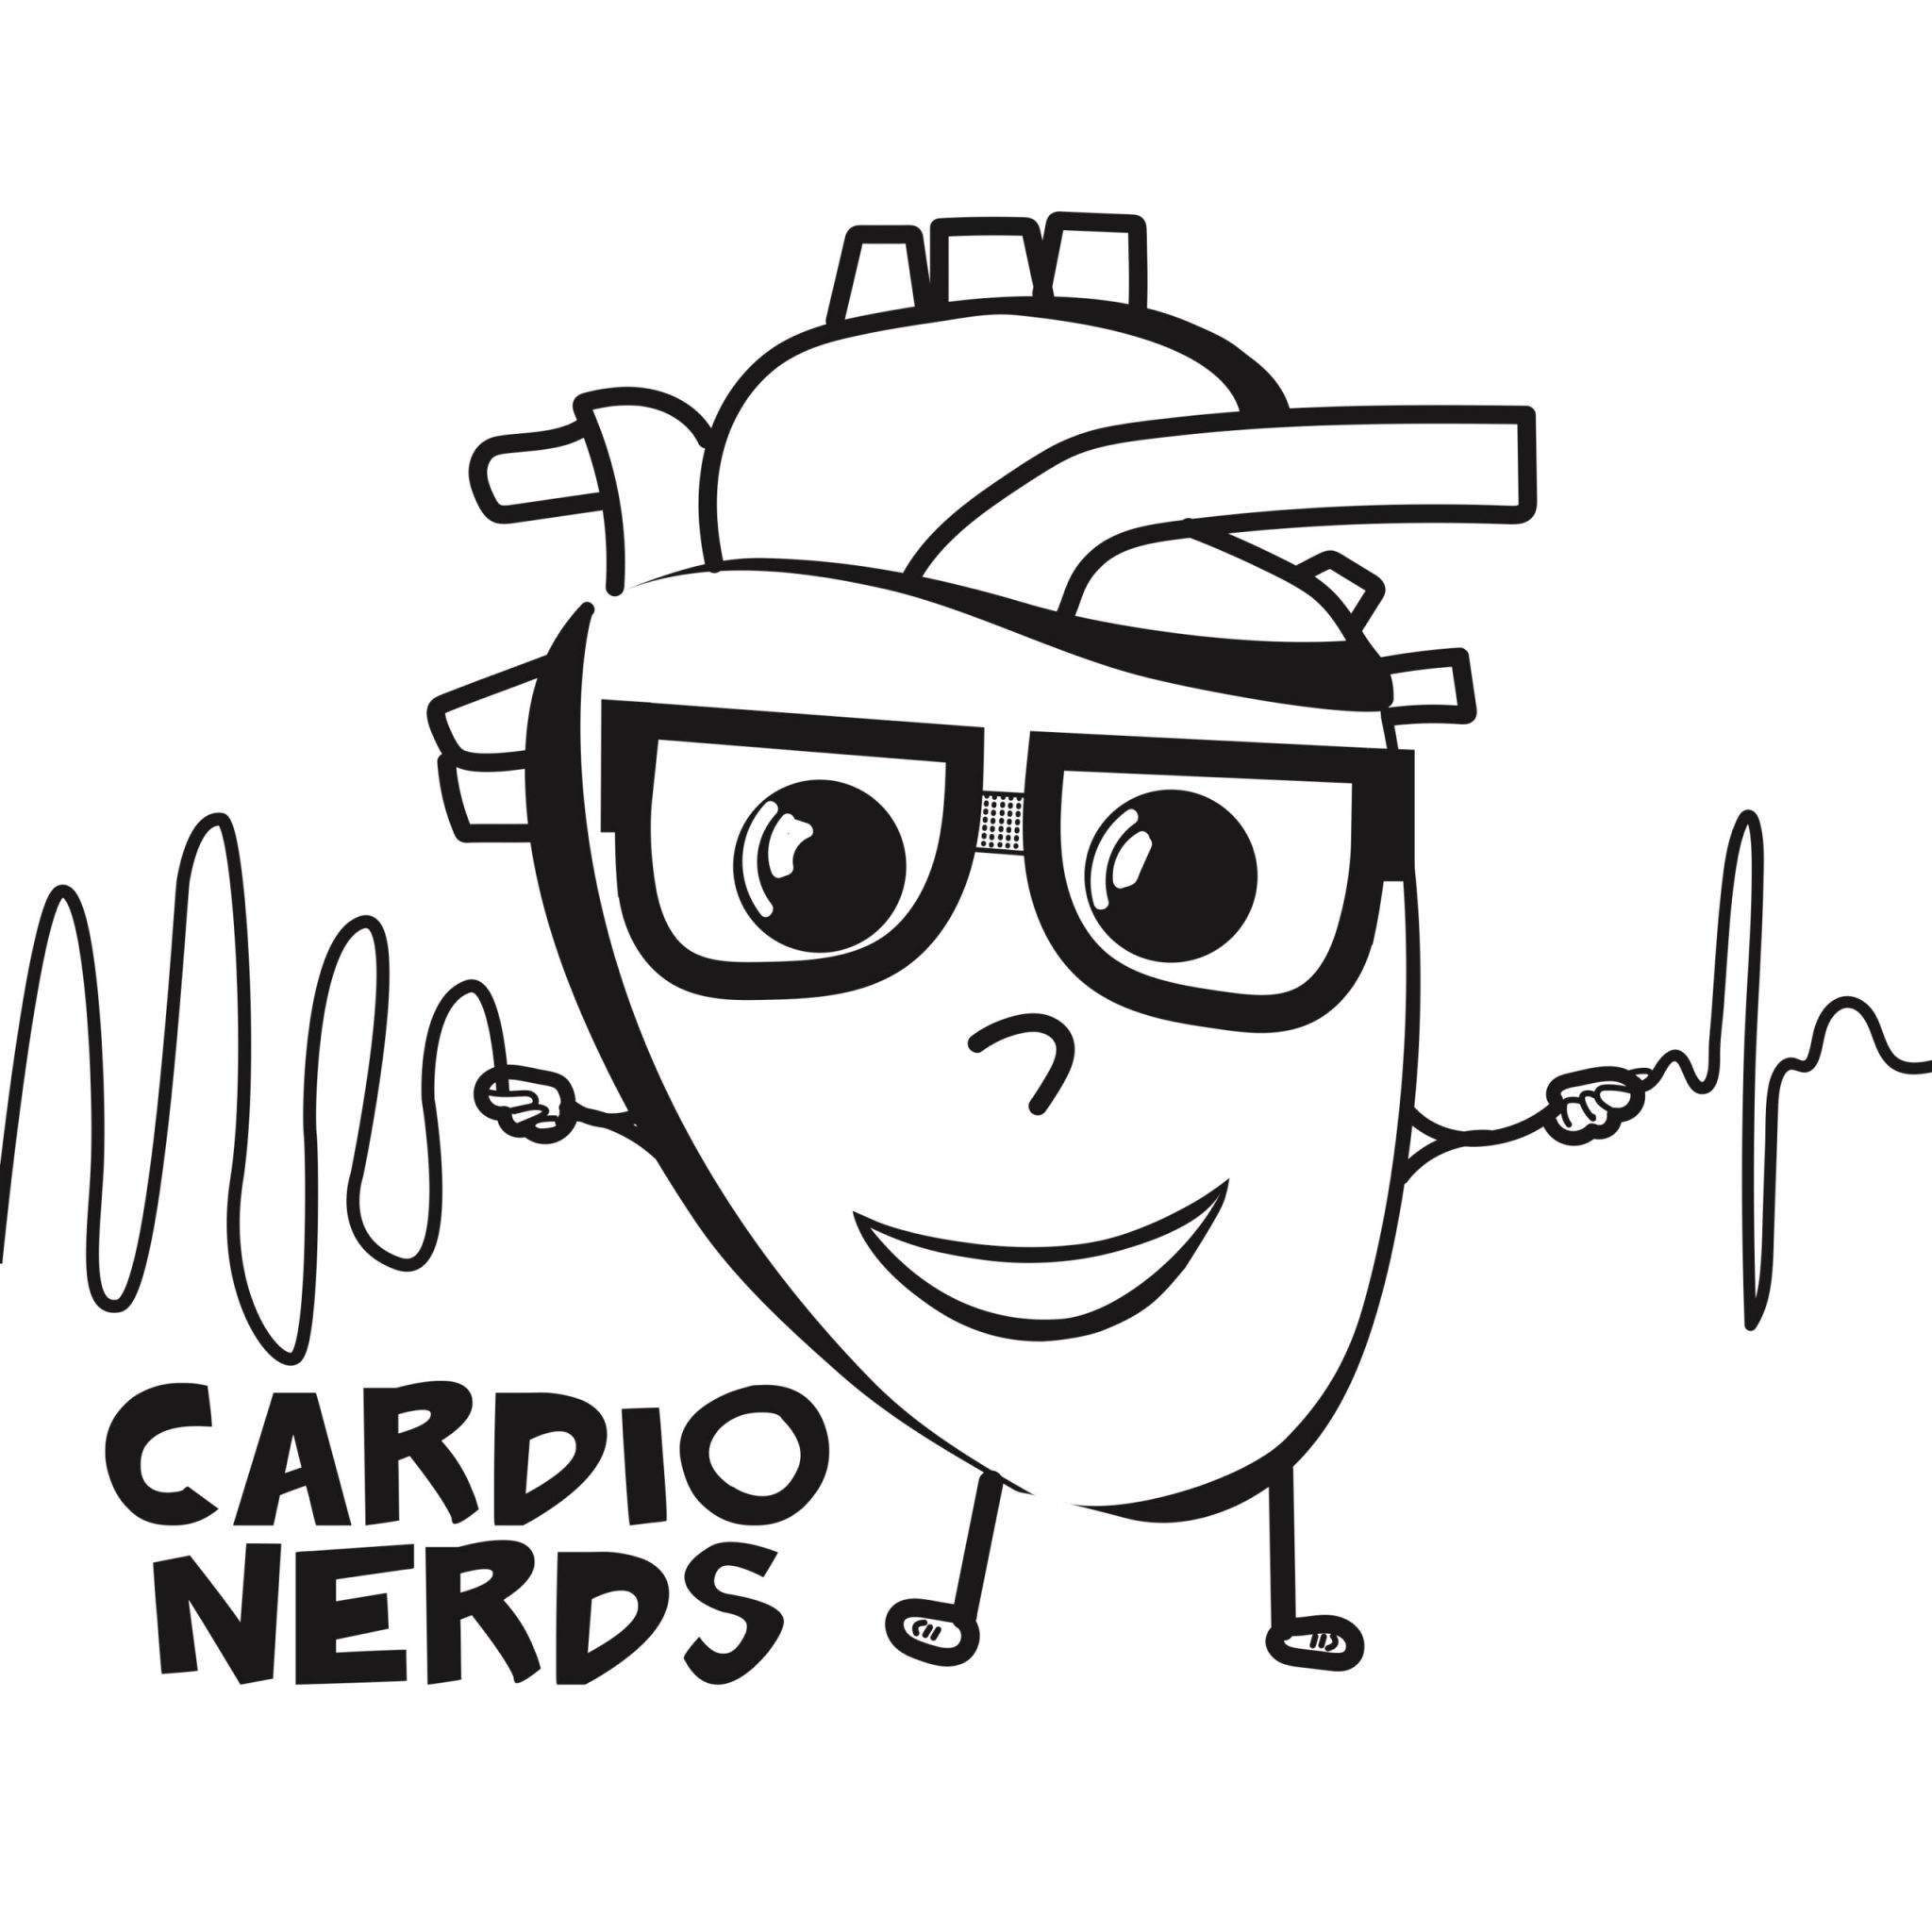 CardioNerds logo